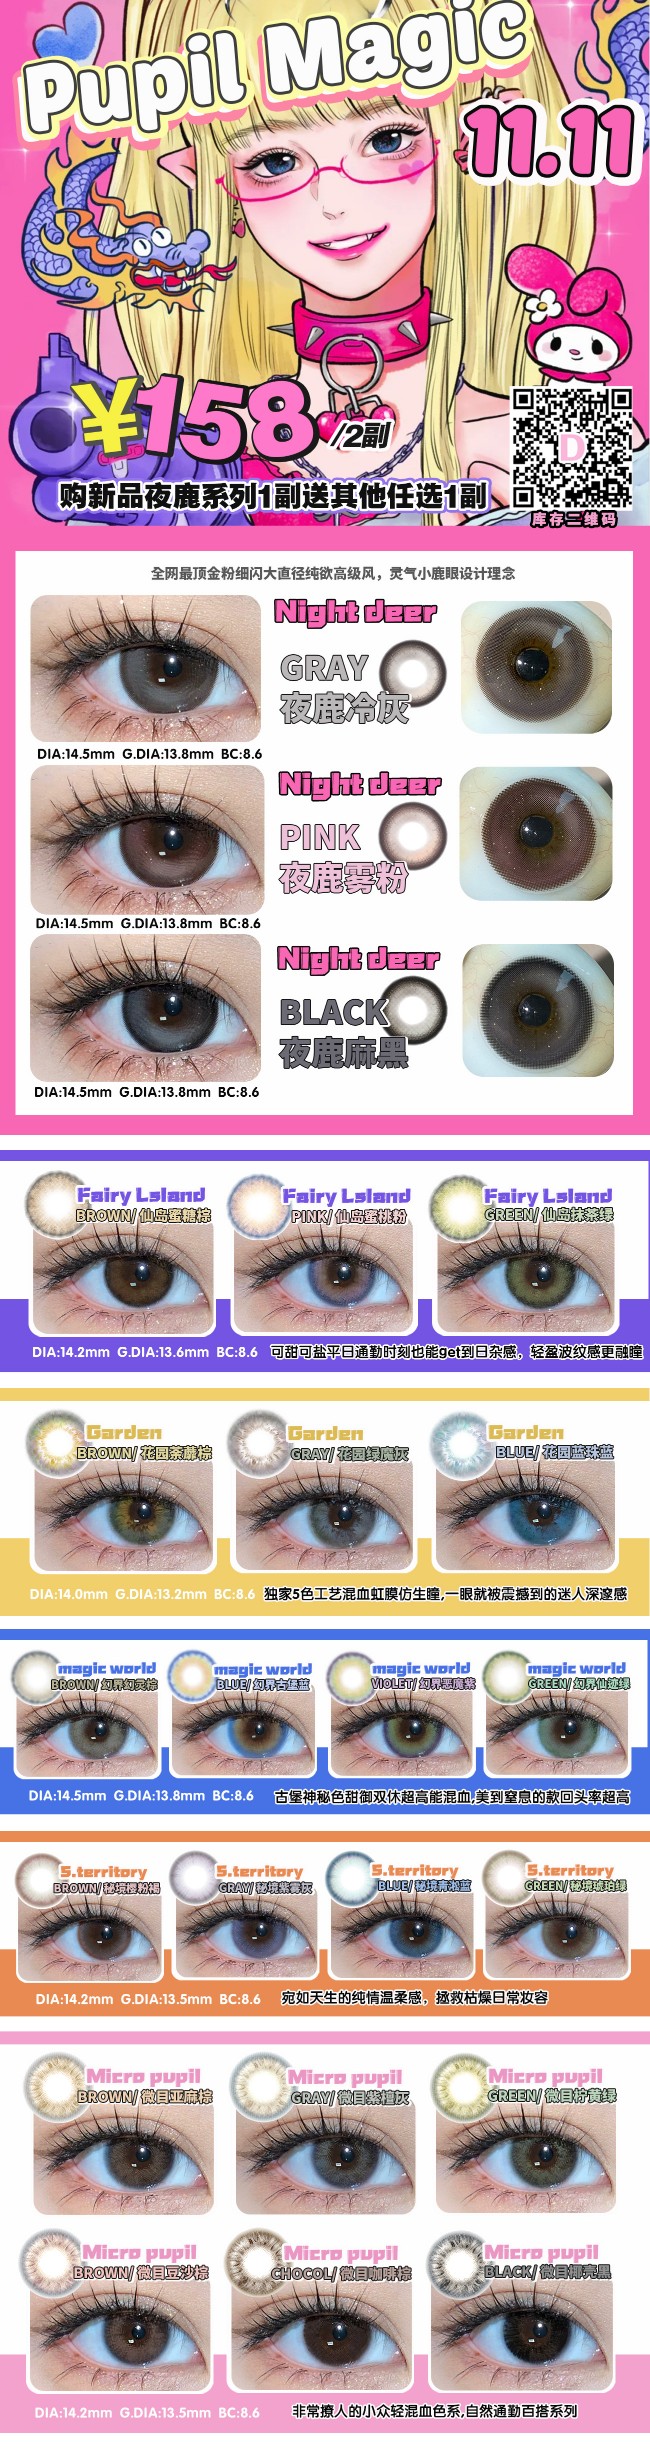 PupilMagic瞳术&丹娜 活动买一送一 - VVCON美瞳网